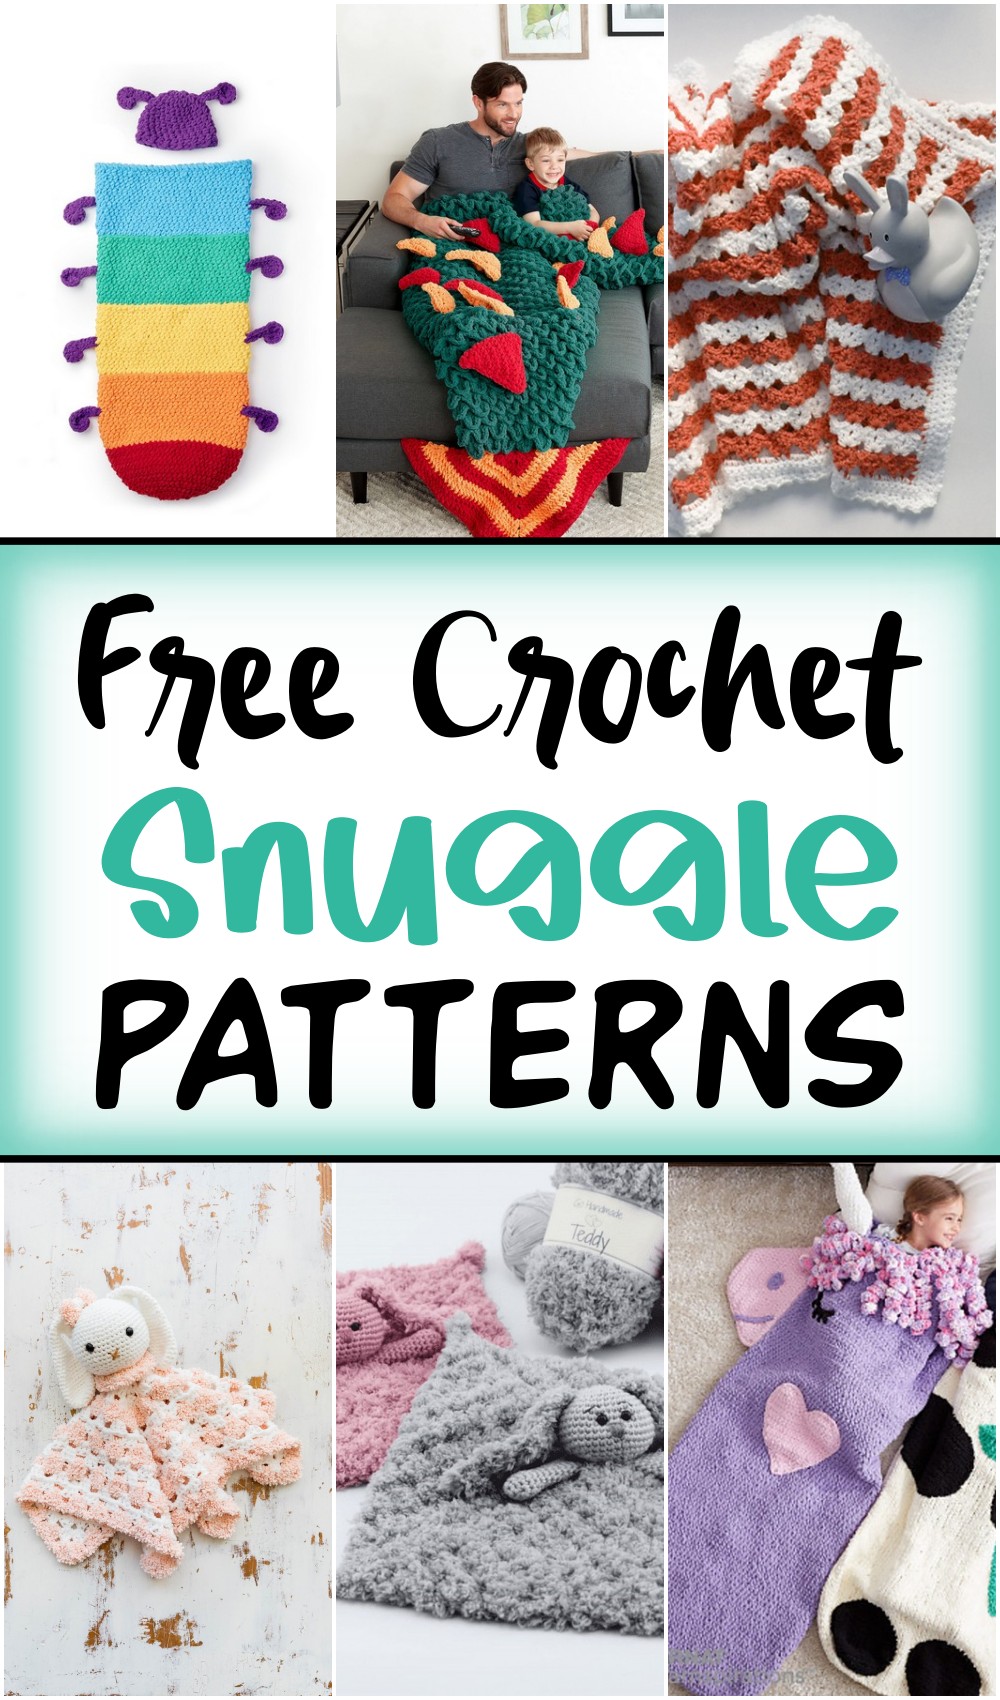 Free Crochet Snuggle Patterns